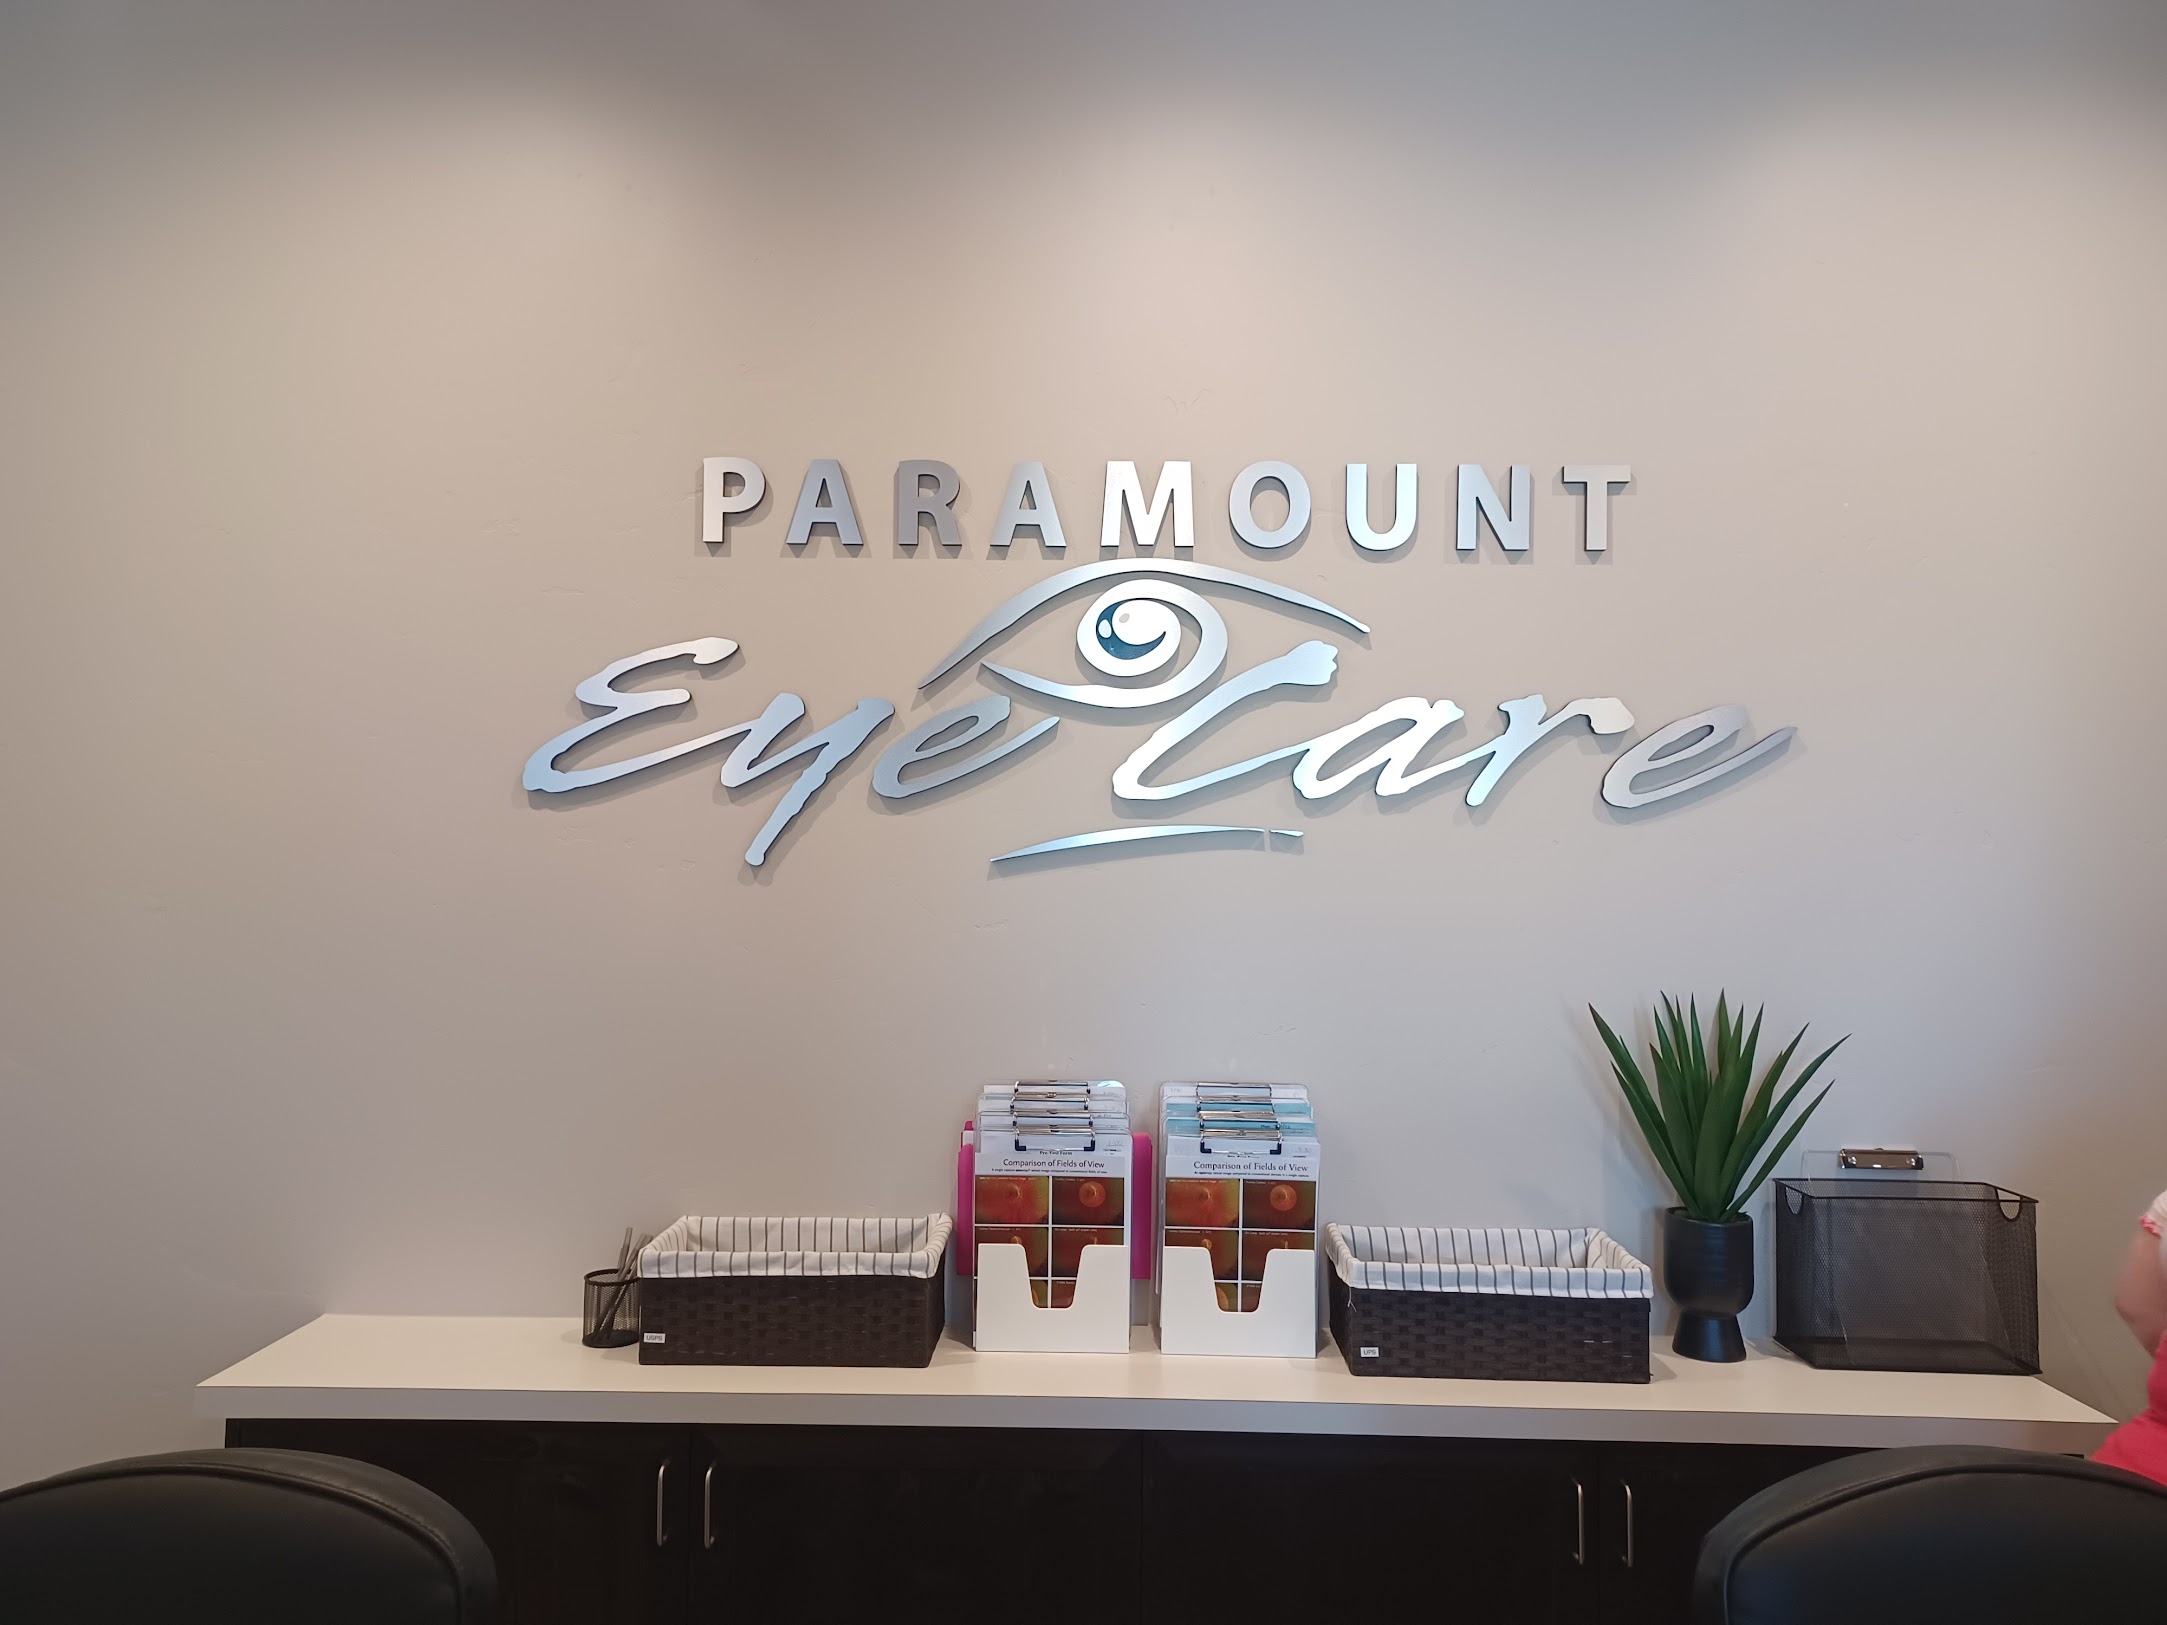 Paramount Eye Care Reception Sign